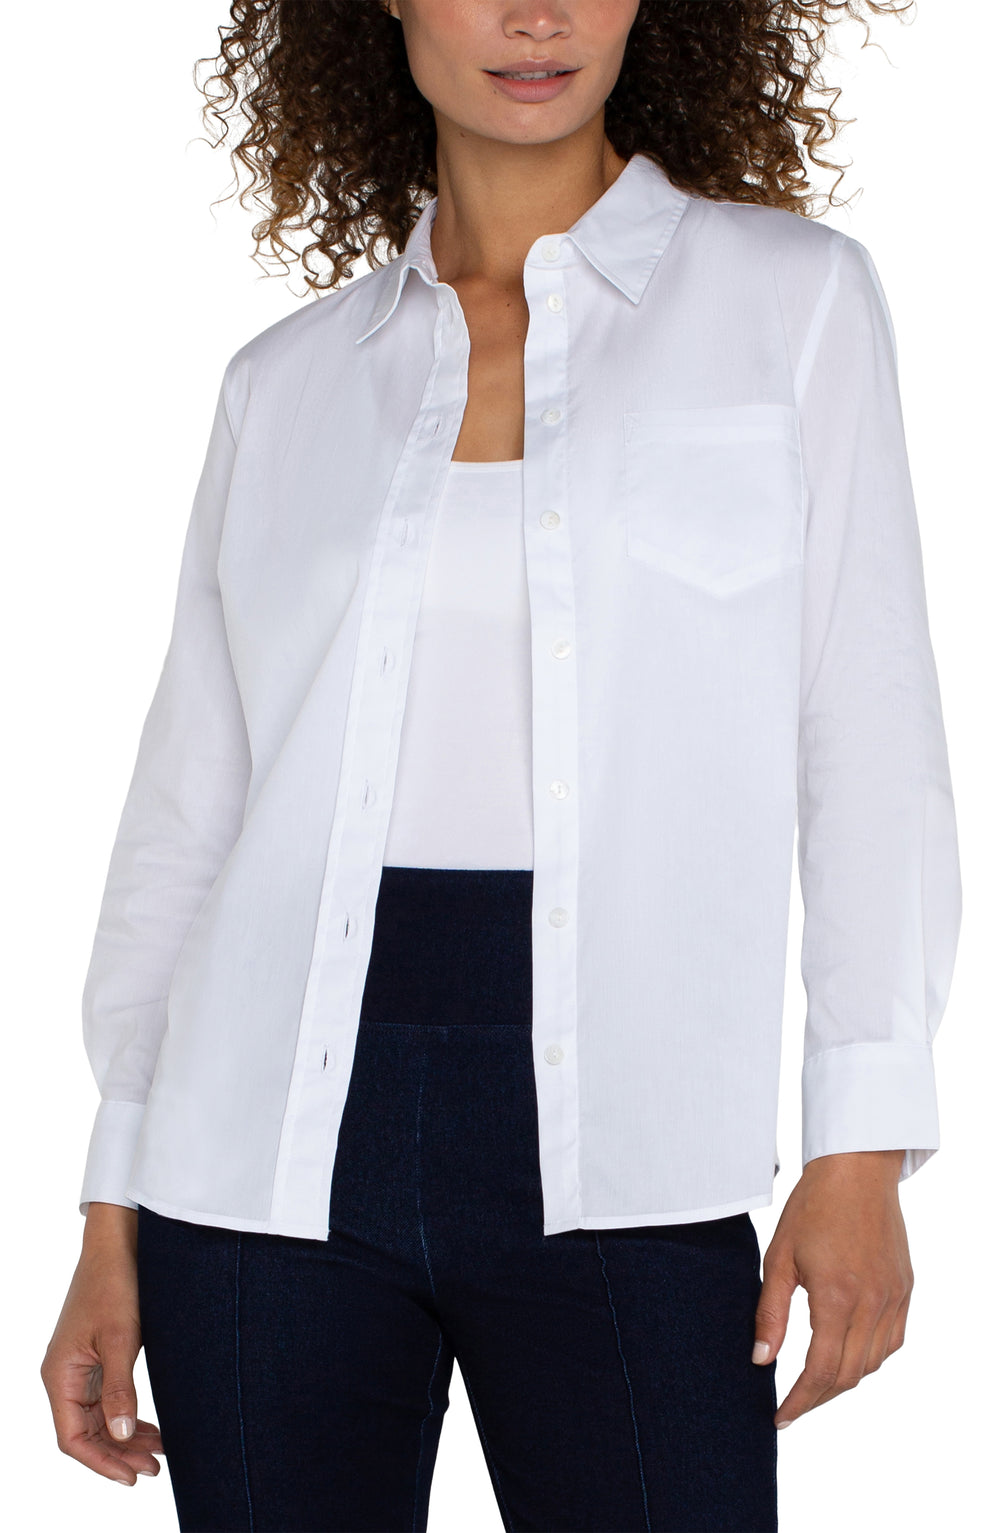 Button front classice white blouse - Tru Blue Boutique